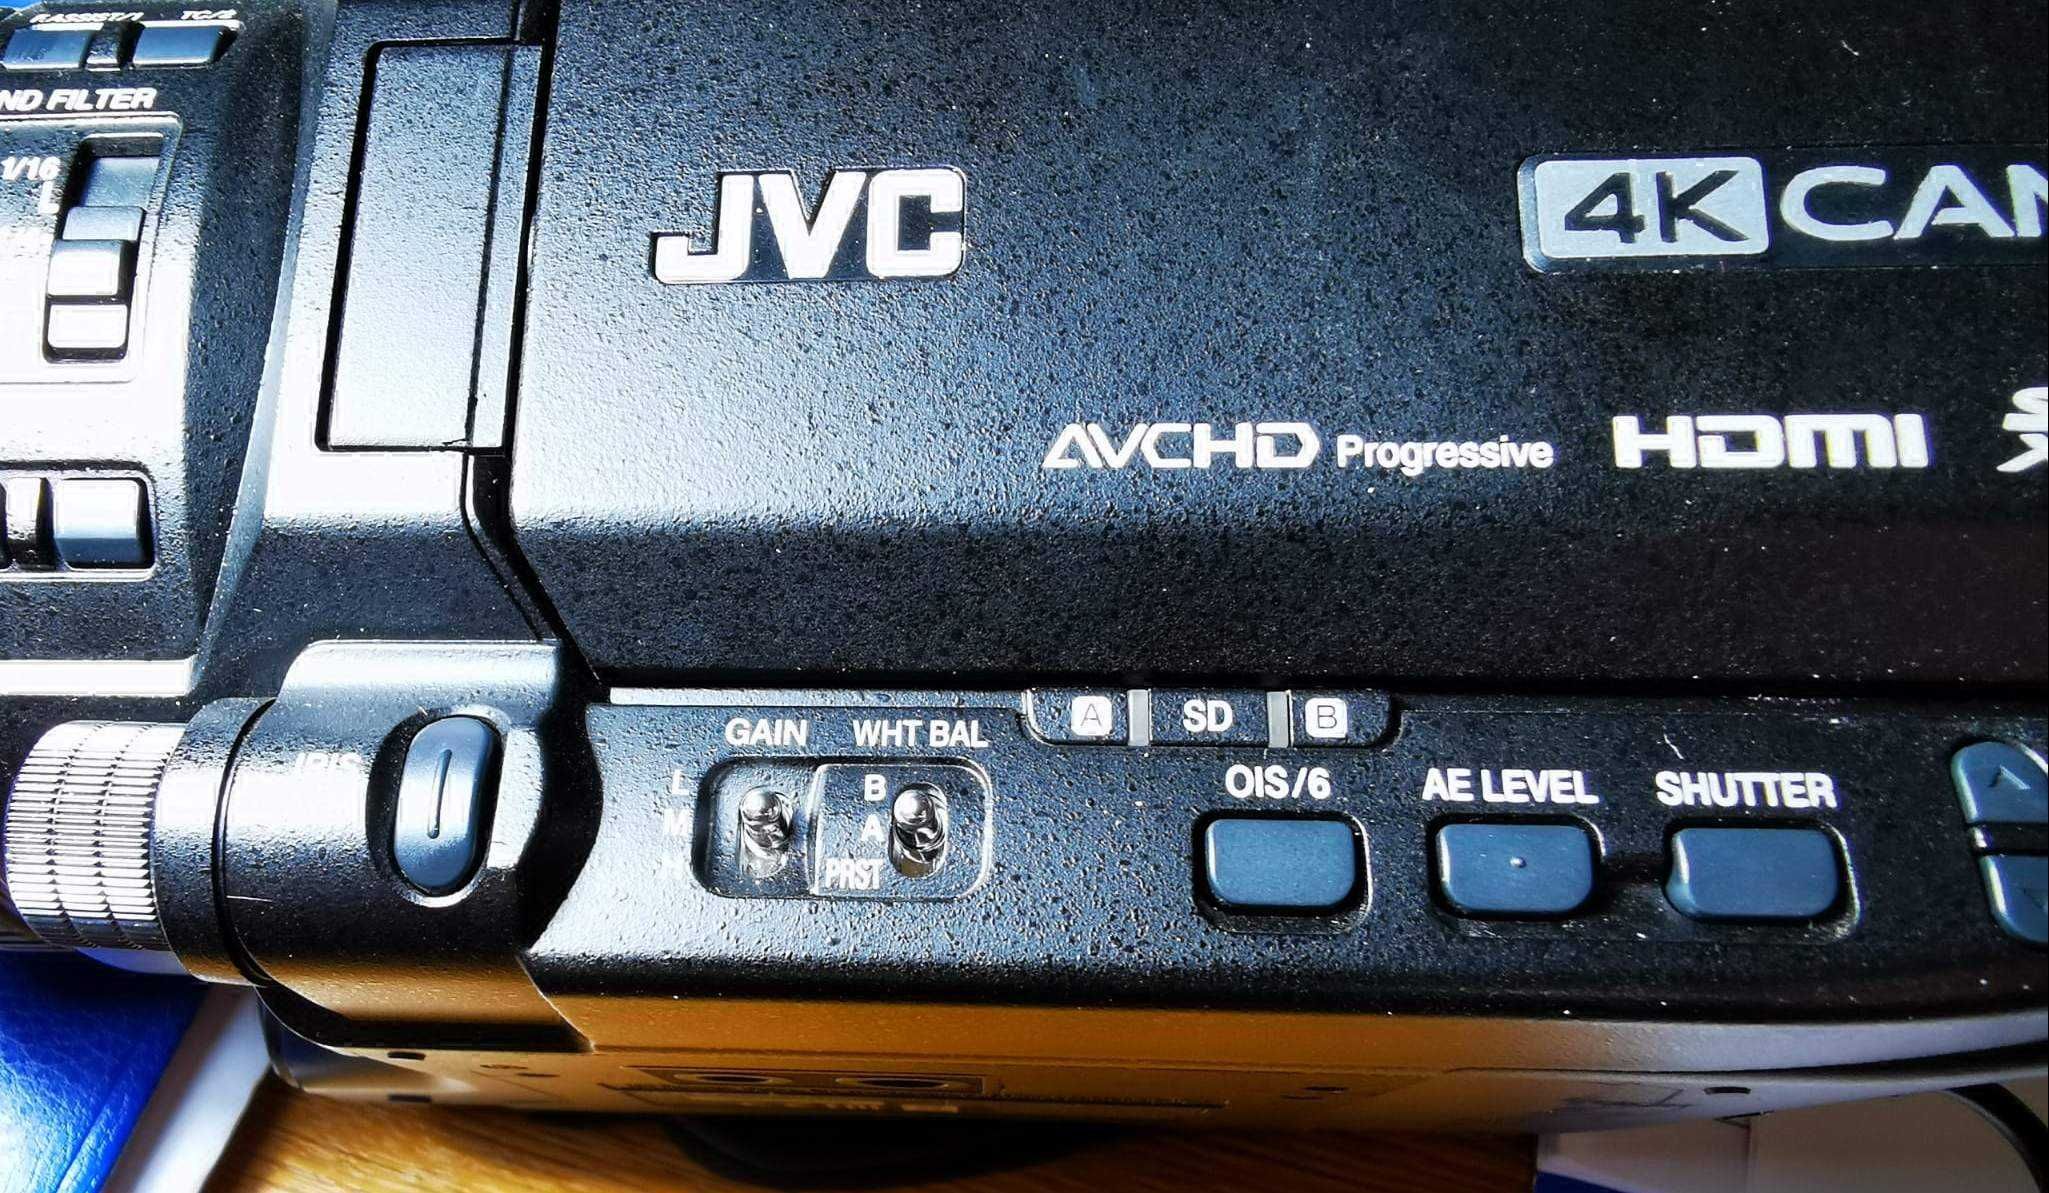 Vand sau Schimb Camera video JVC GY-HM170E 4KCAM